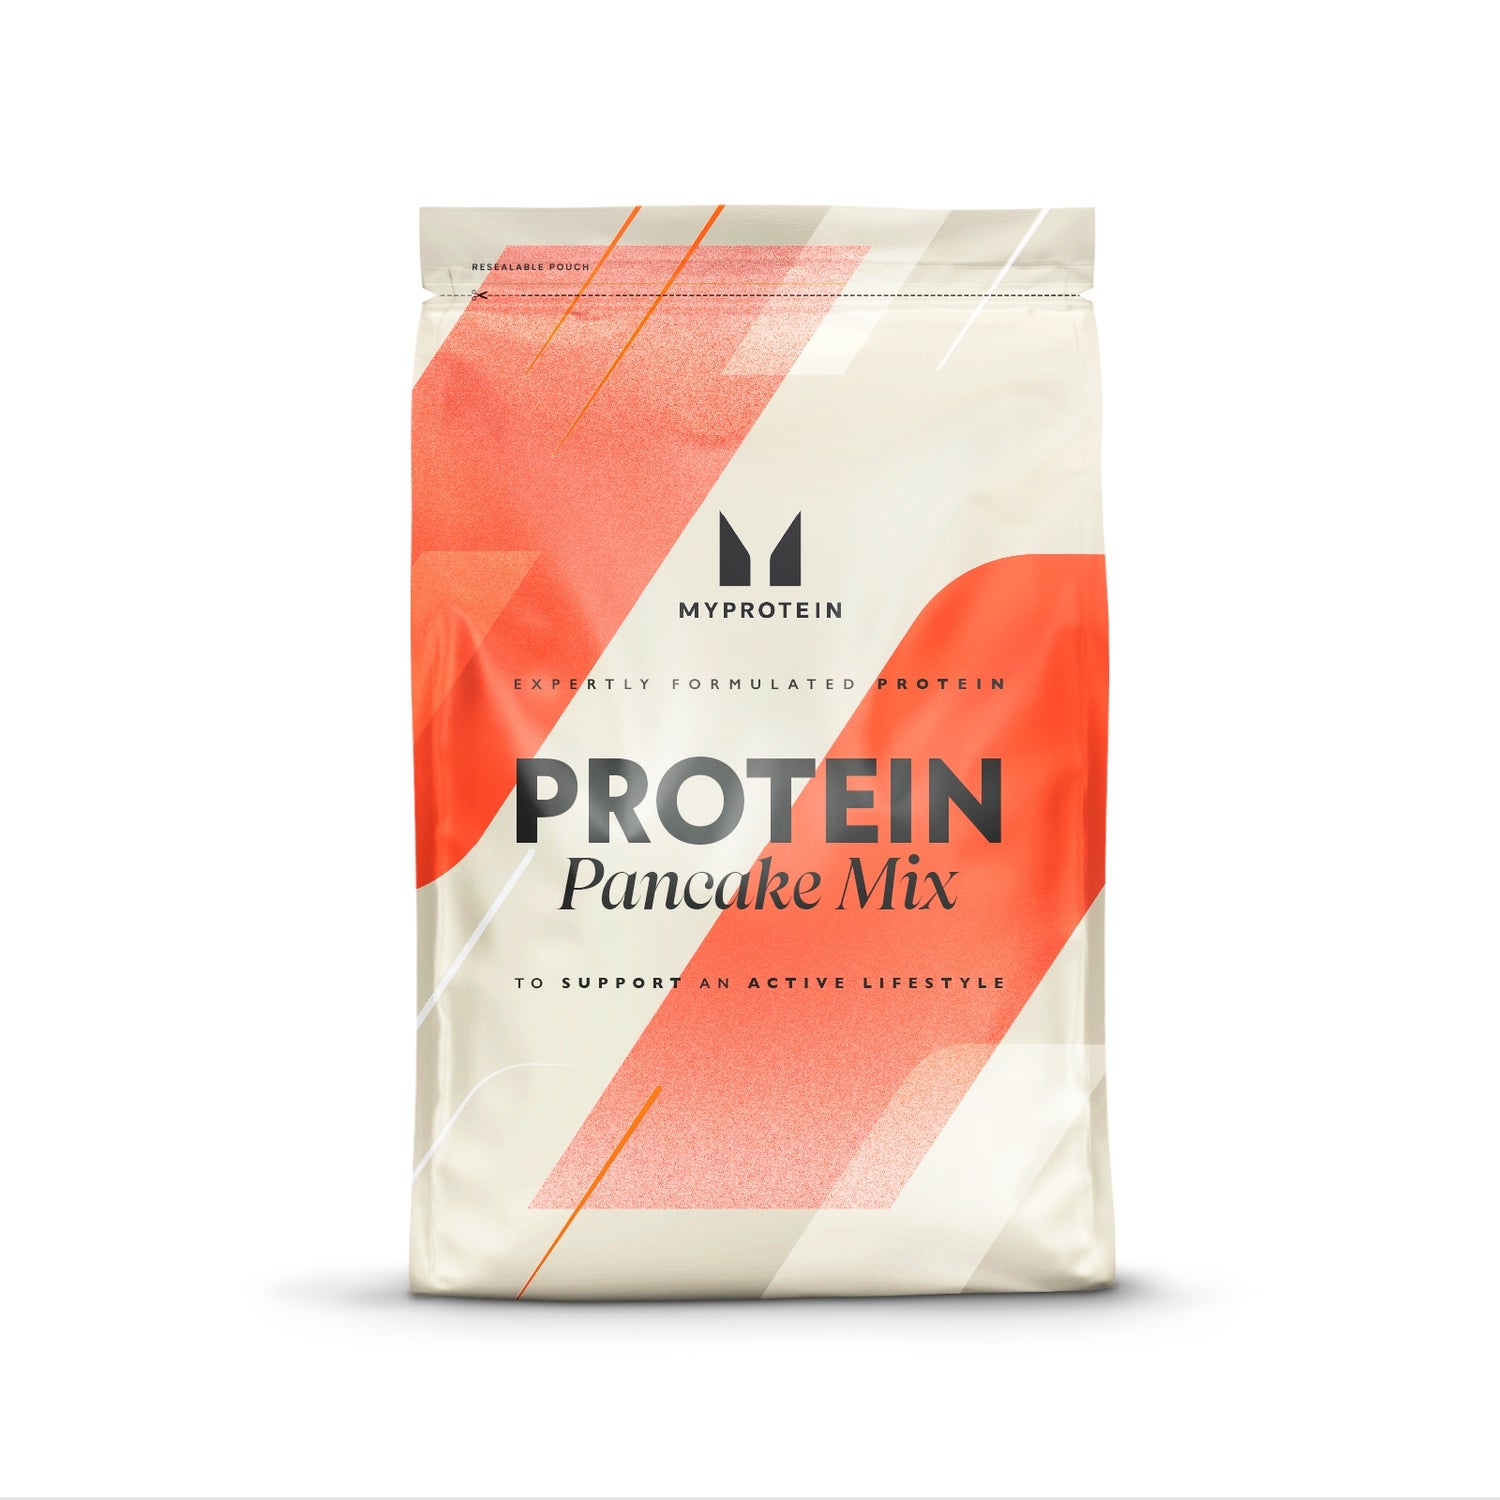 Protein Pancake Mix - 2.2lb - Buttermilk